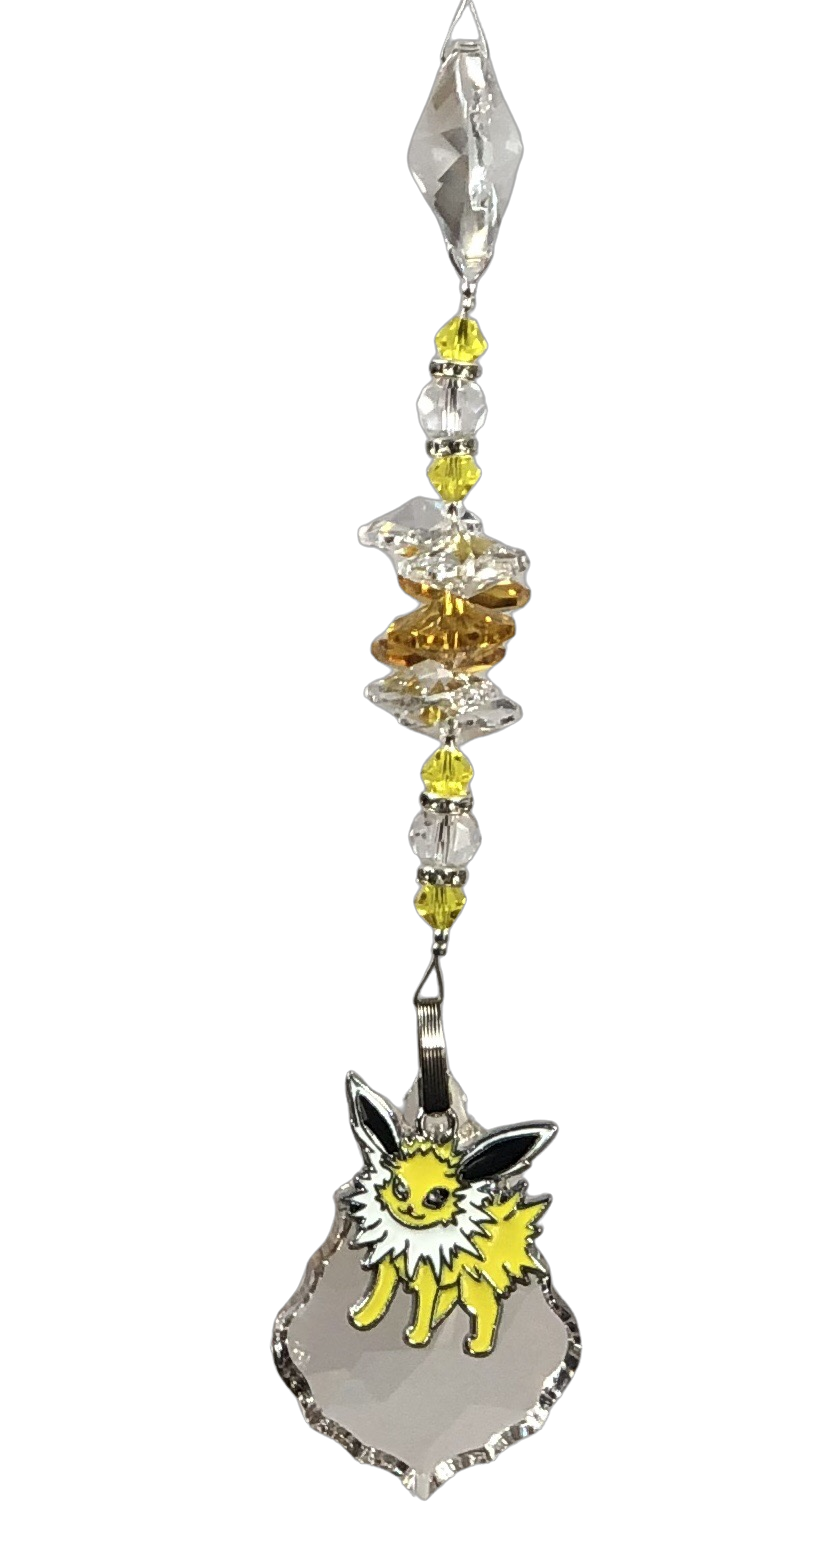 Pokémon Eevee evolution - Jolteon crystal suncatcher, decorated with 50mm starburst crystal and citrine gemstone.